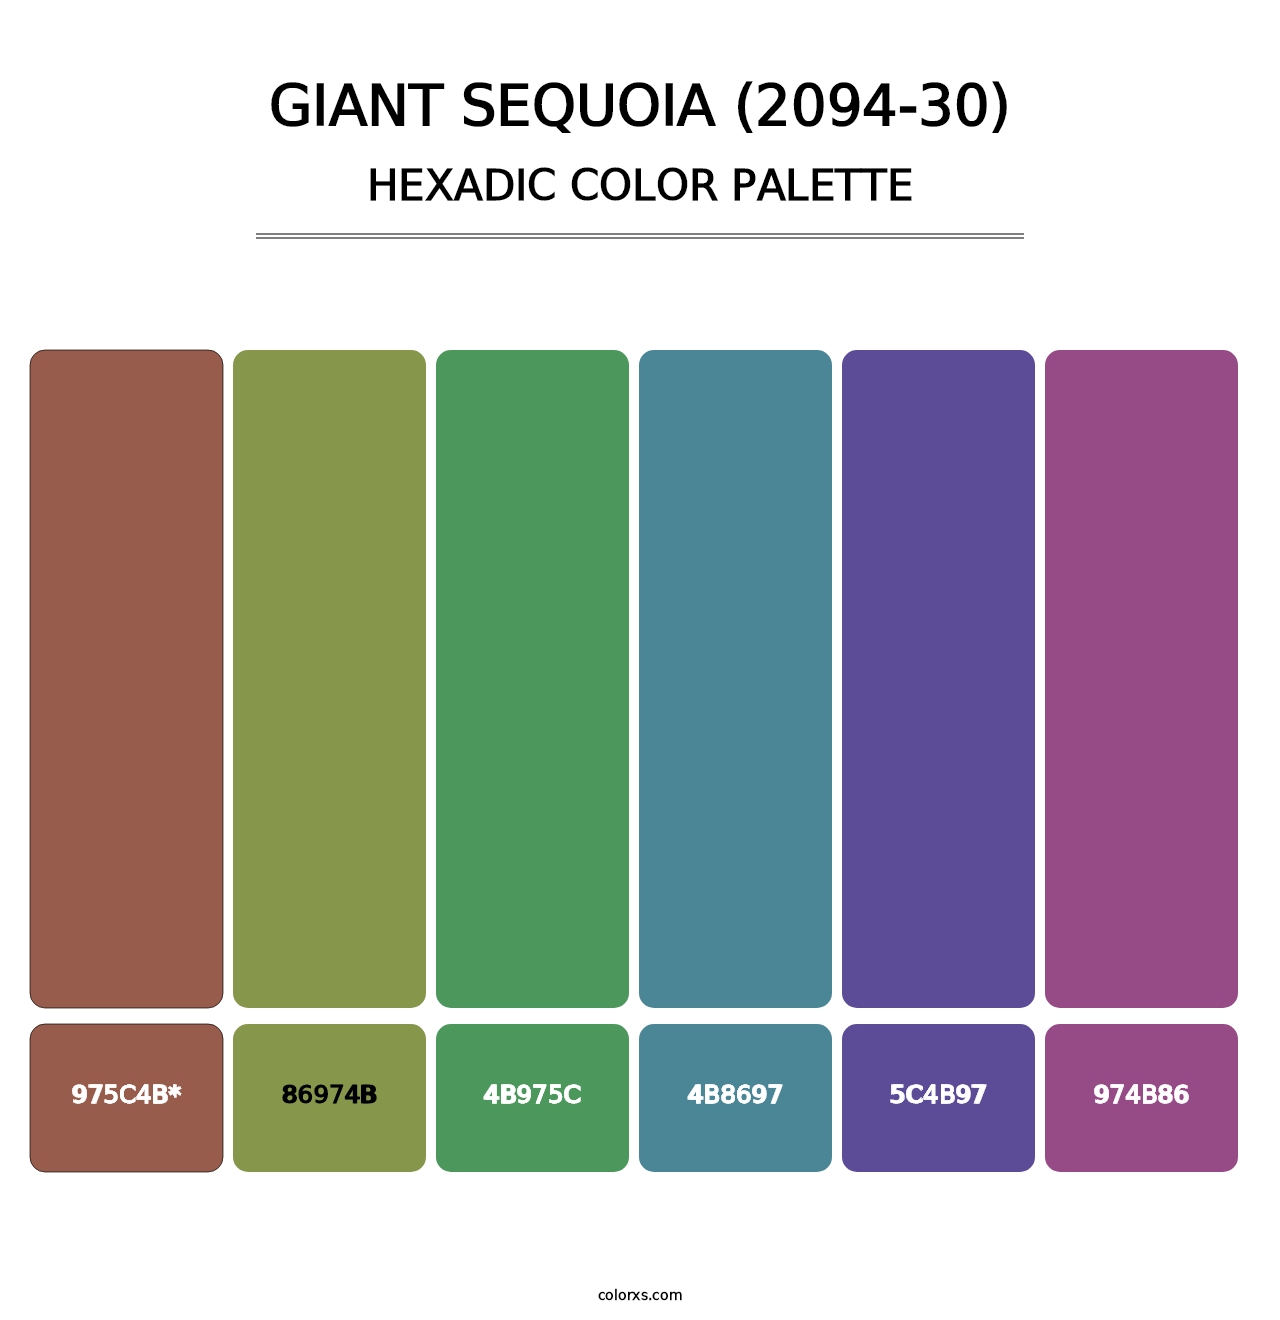 Giant Sequoia (2094-30) - Hexadic Color Palette